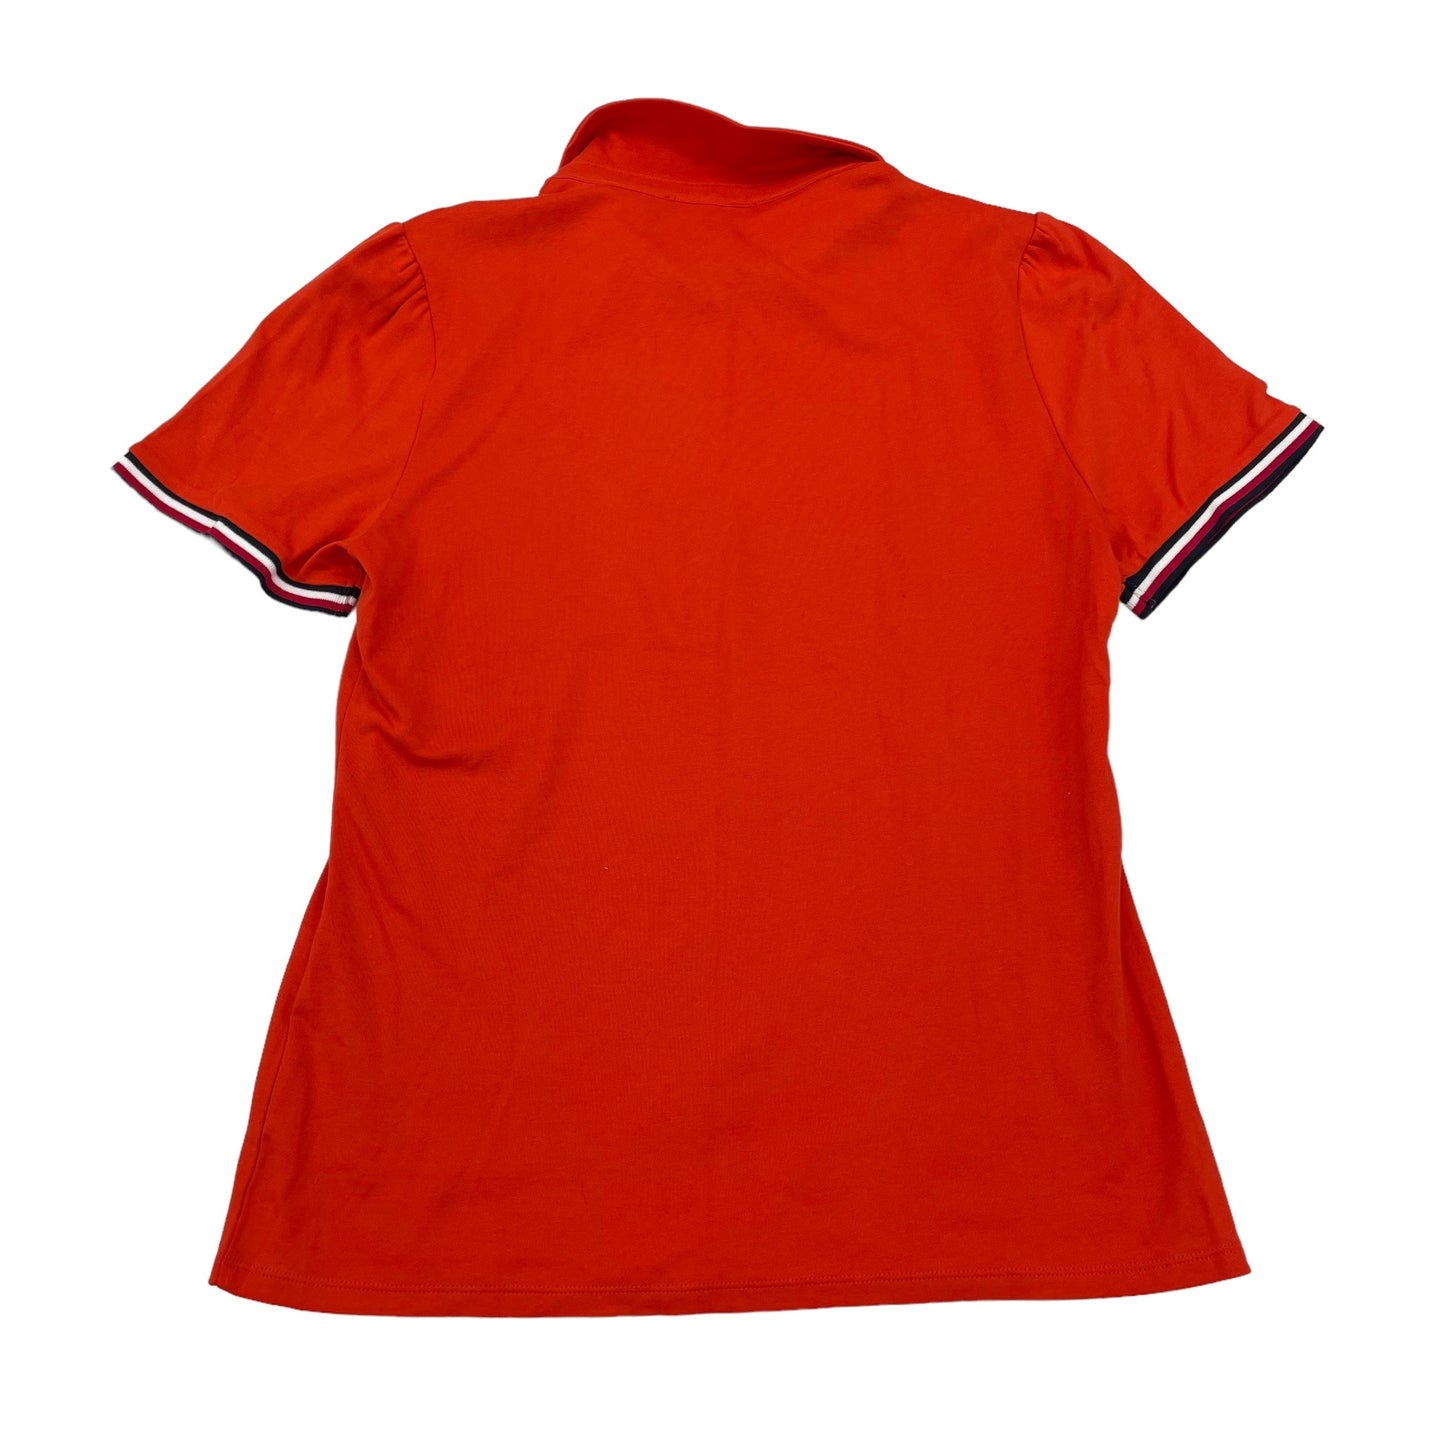 Orange Top Short Sleeve Tommy Hilfiger, Size Xl